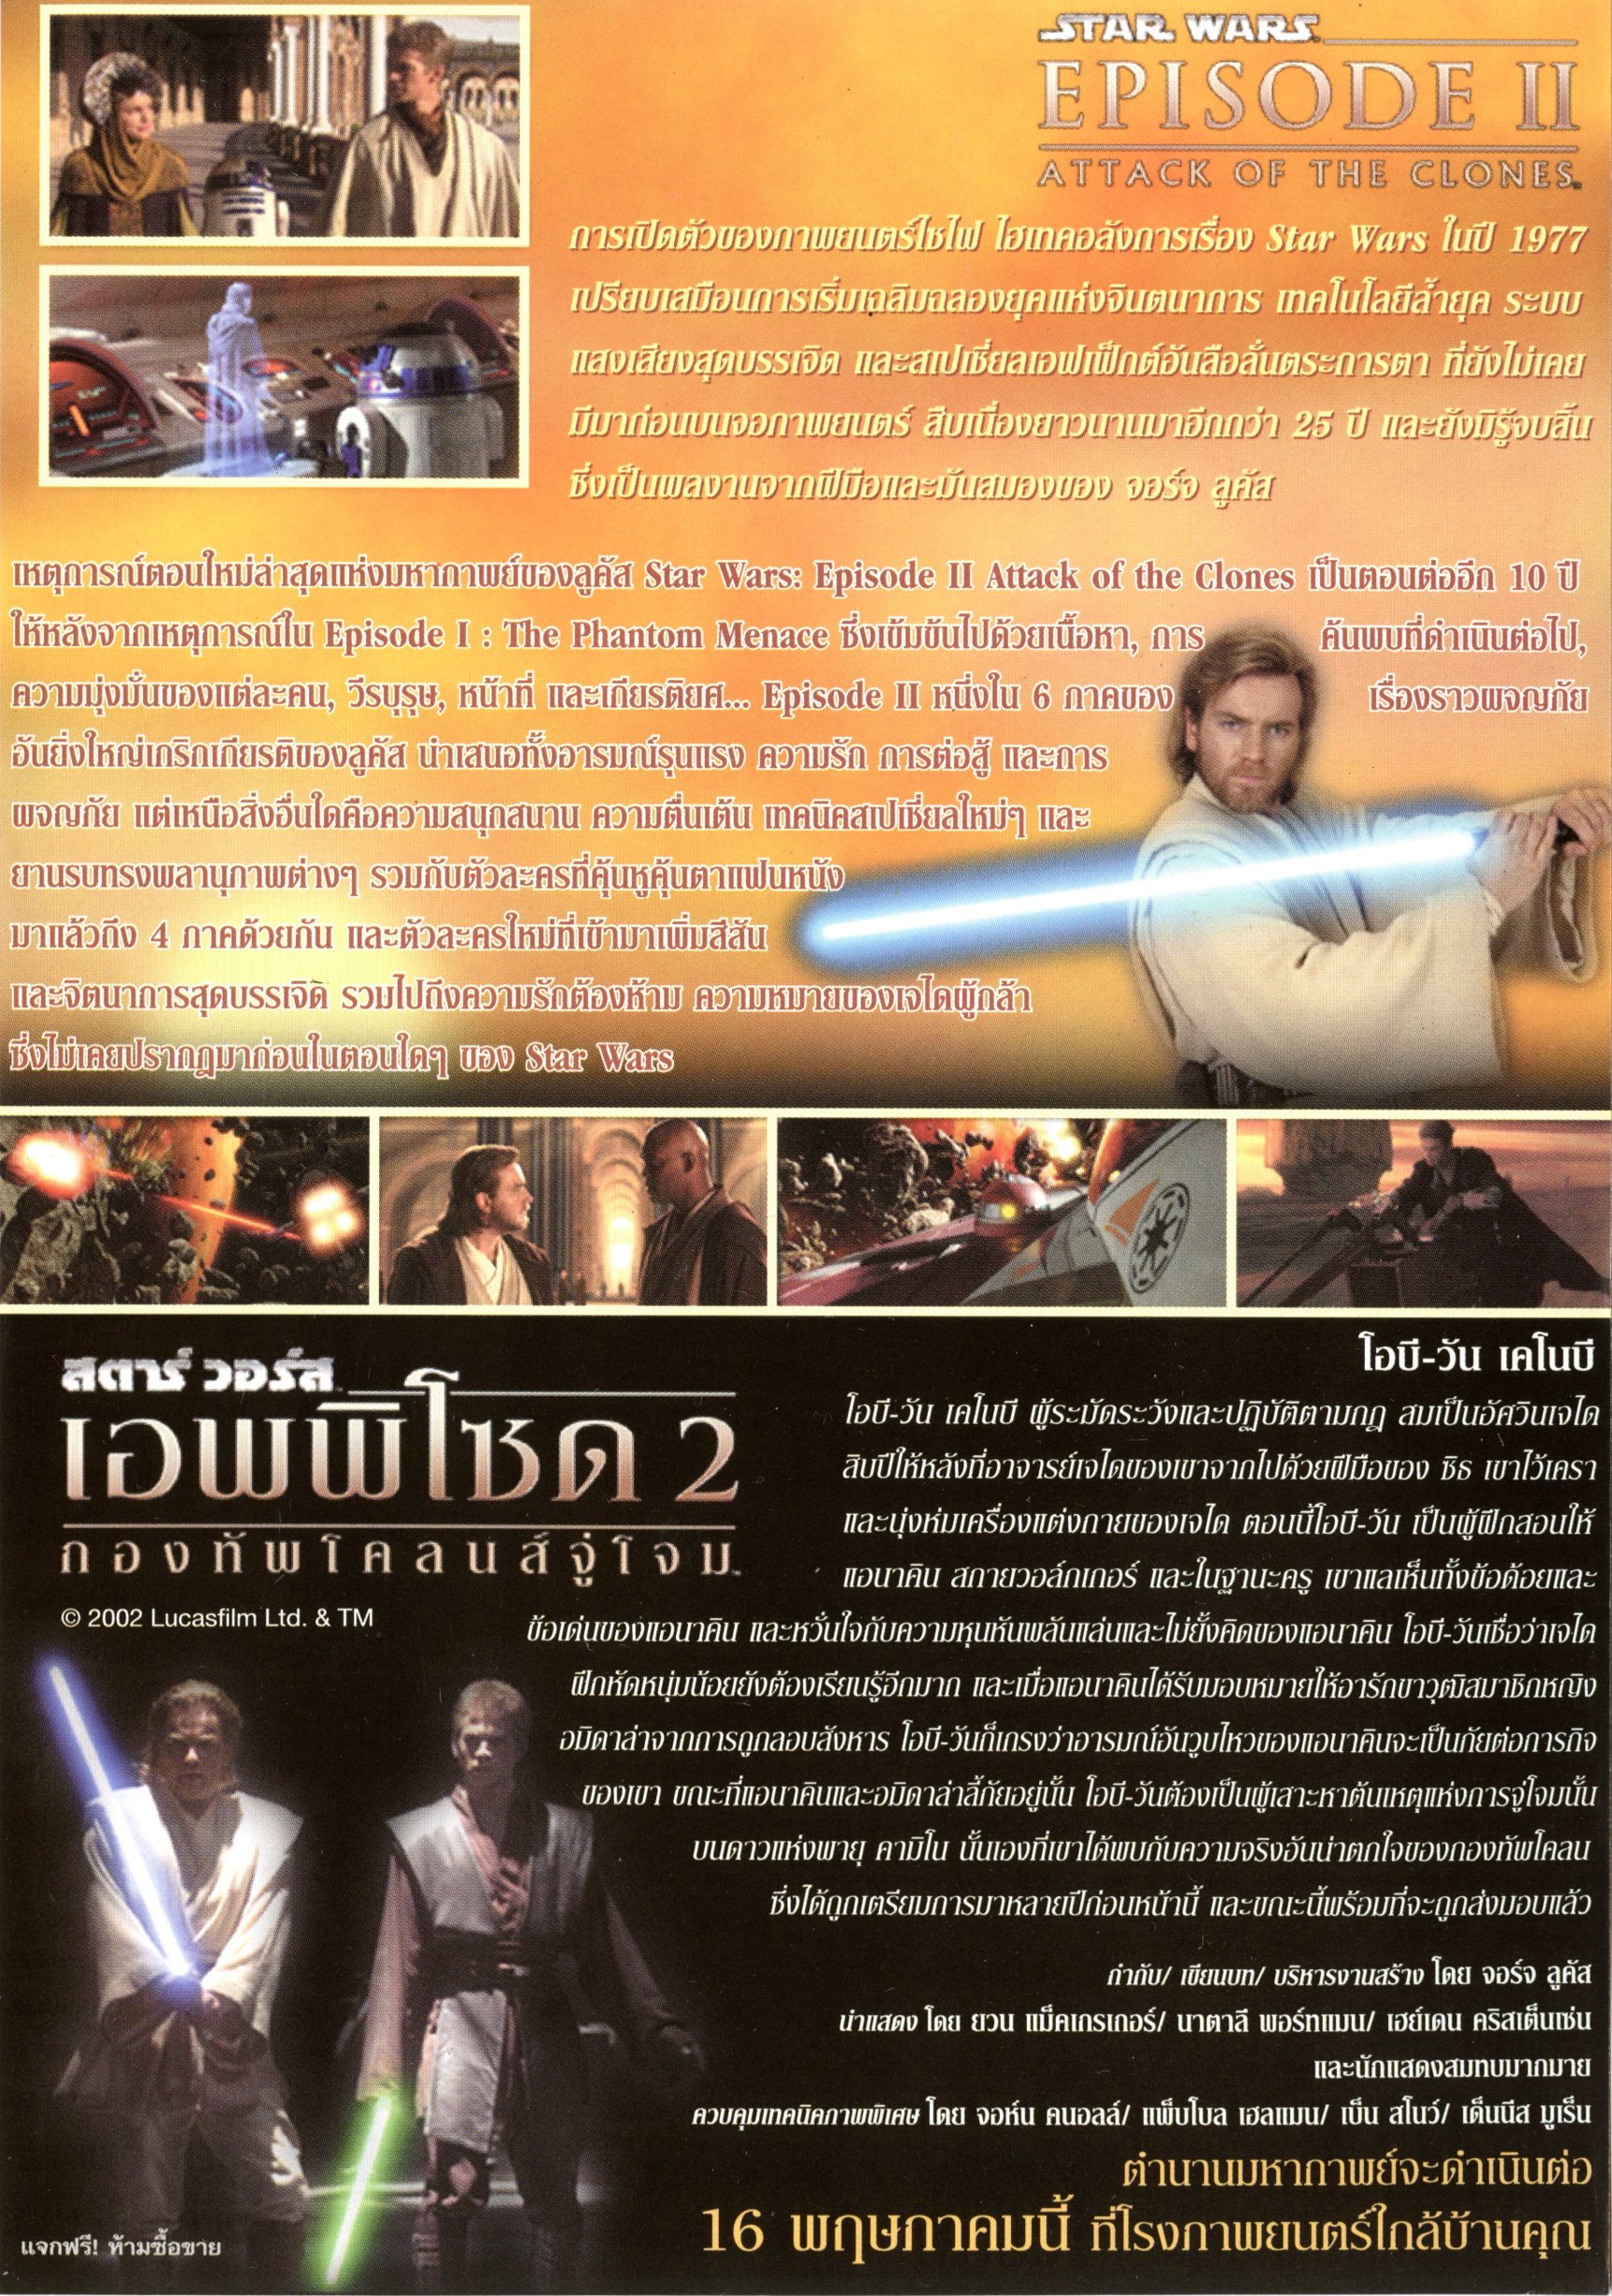 AOTC Thailand Handbill - Obi-Wan 2.jpg